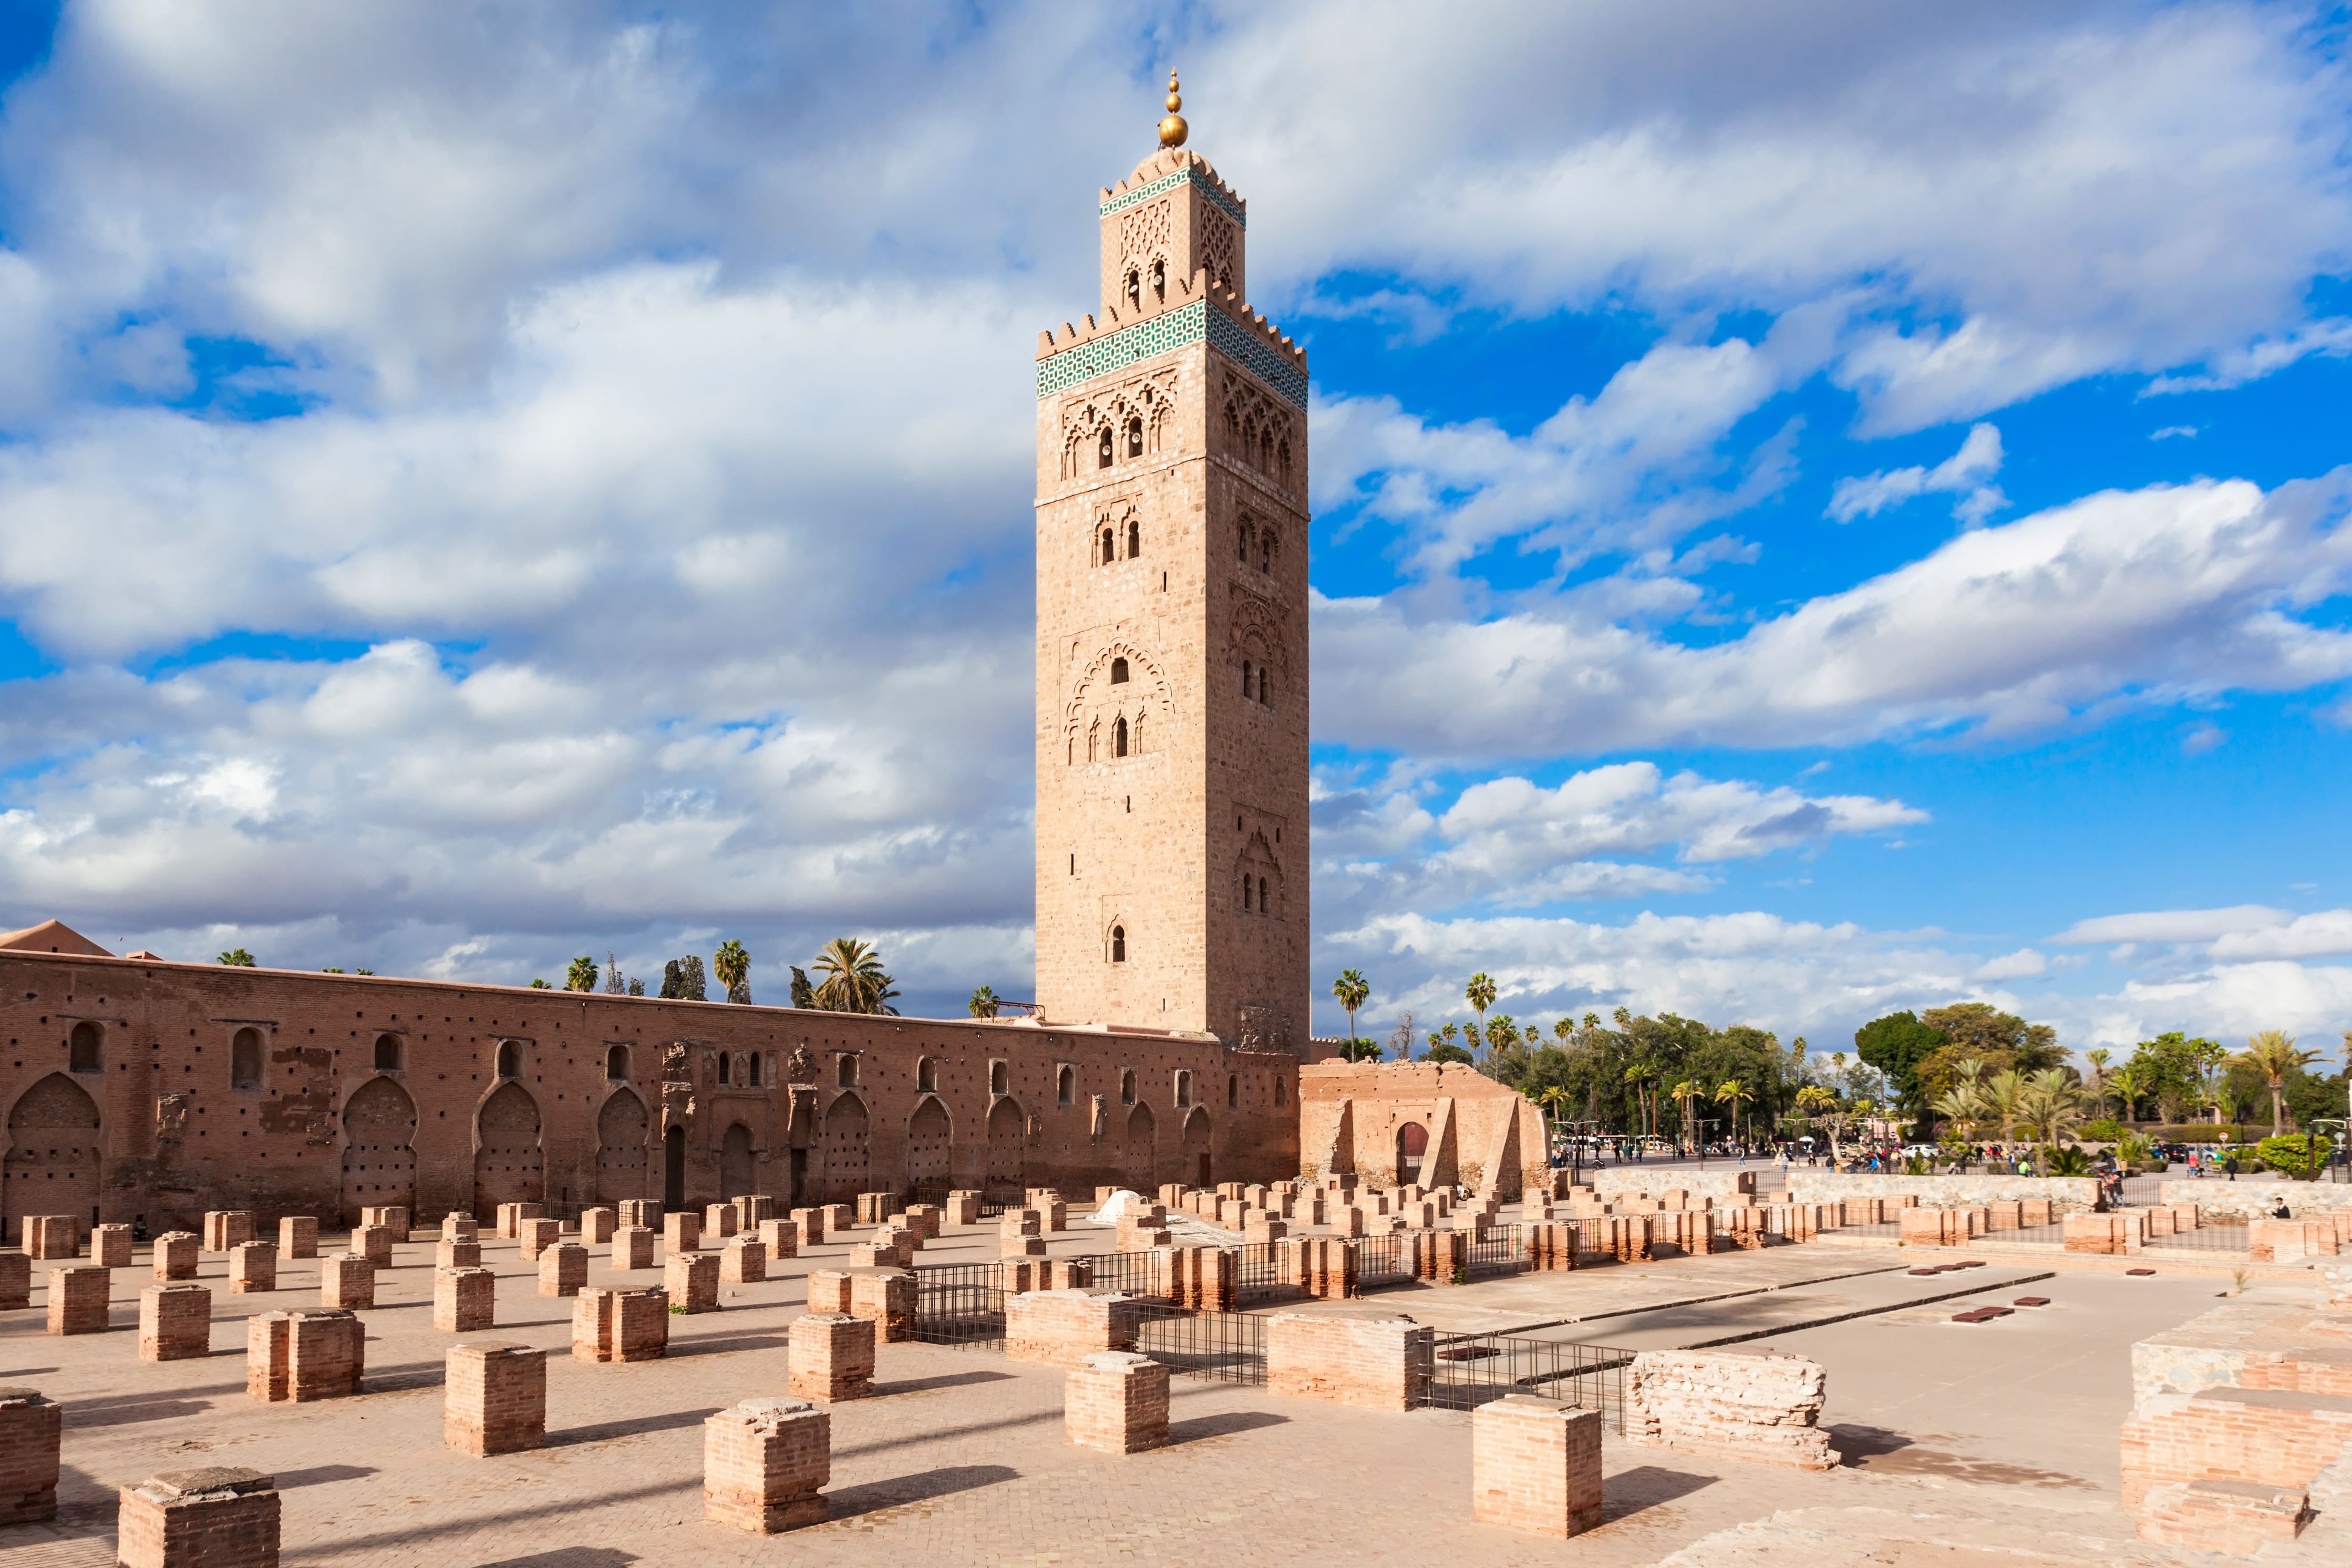 Paquete Turístico Descubre Marruecos